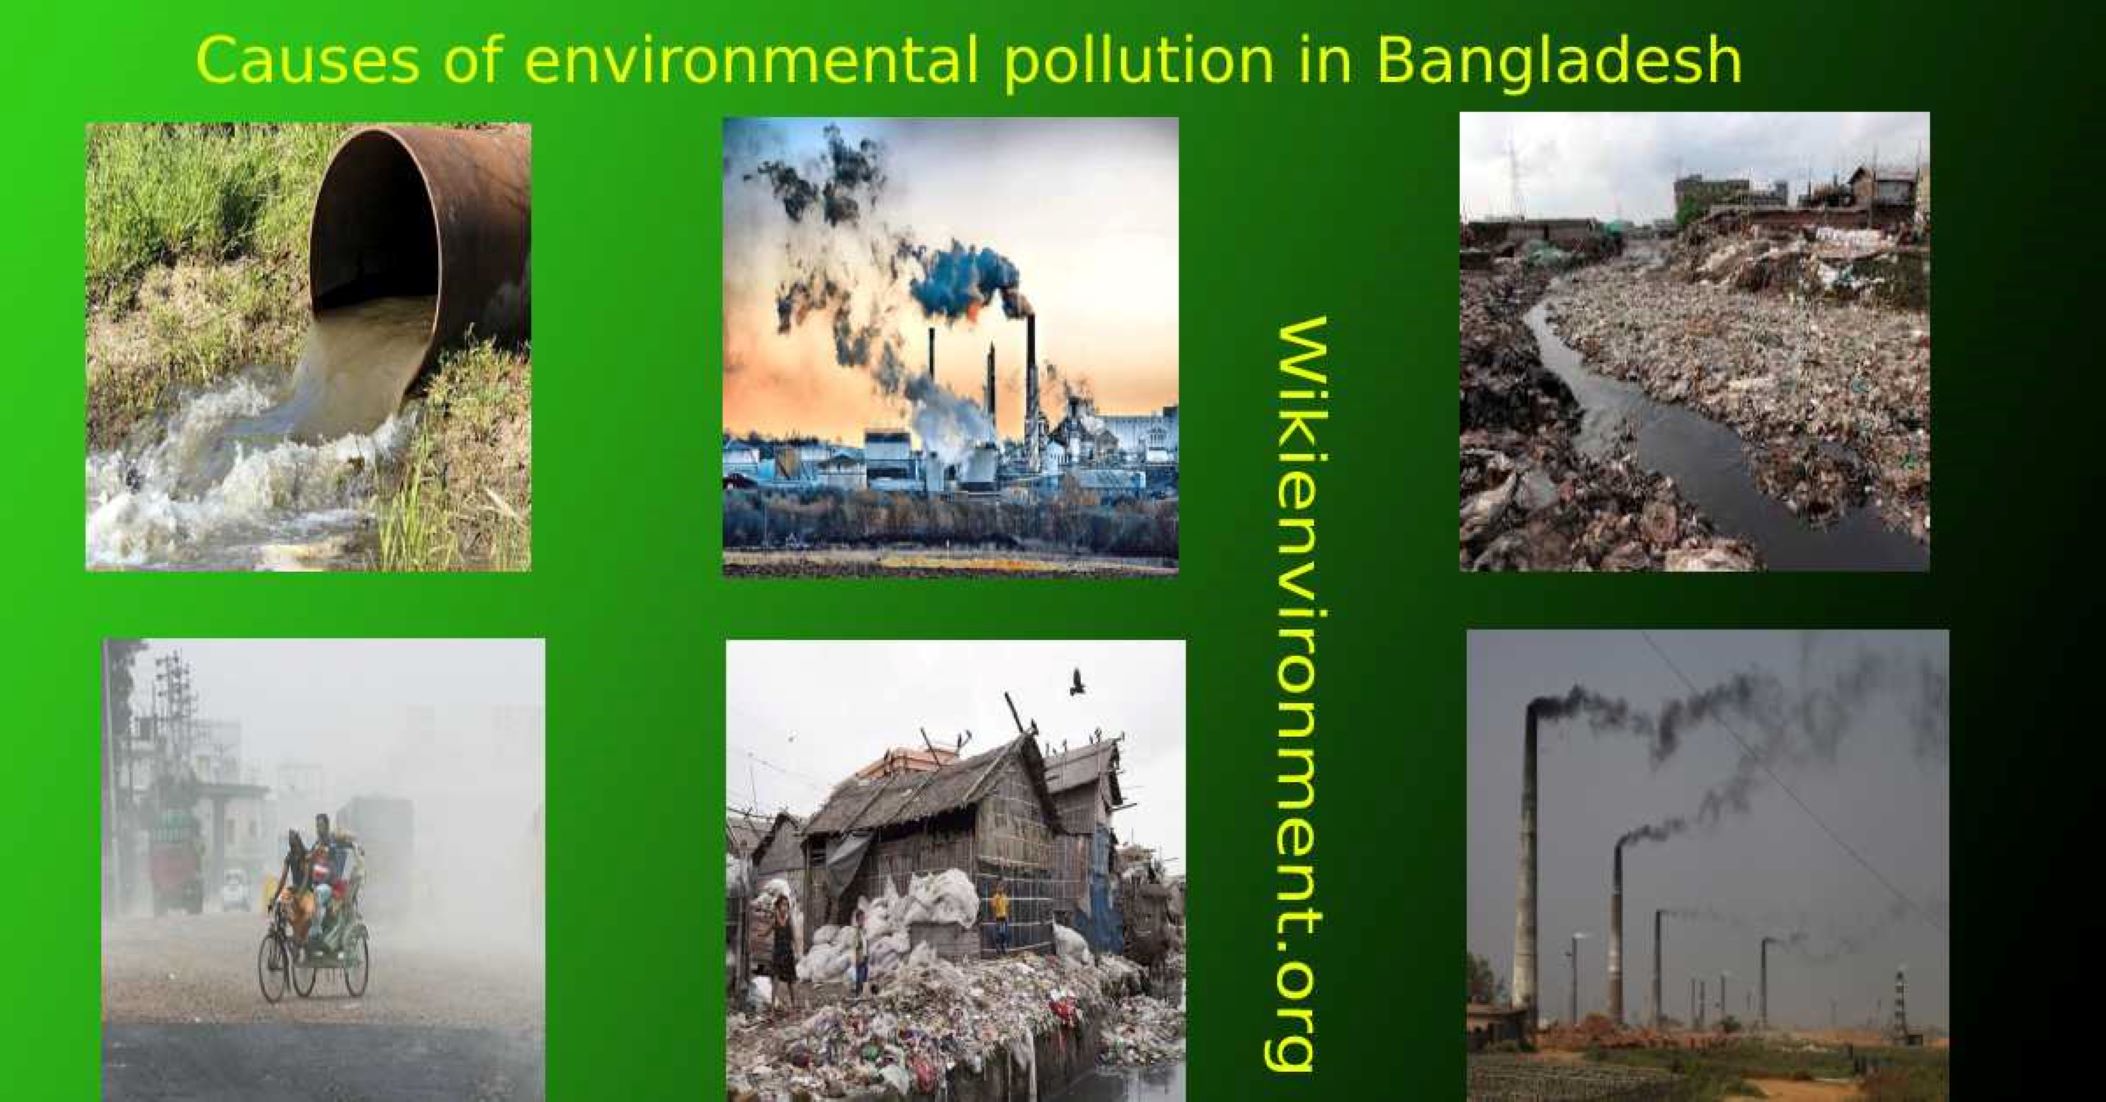 Addressing Environmental Pollution Critical For Bangladesh’s Growth, Development: World Bank Report